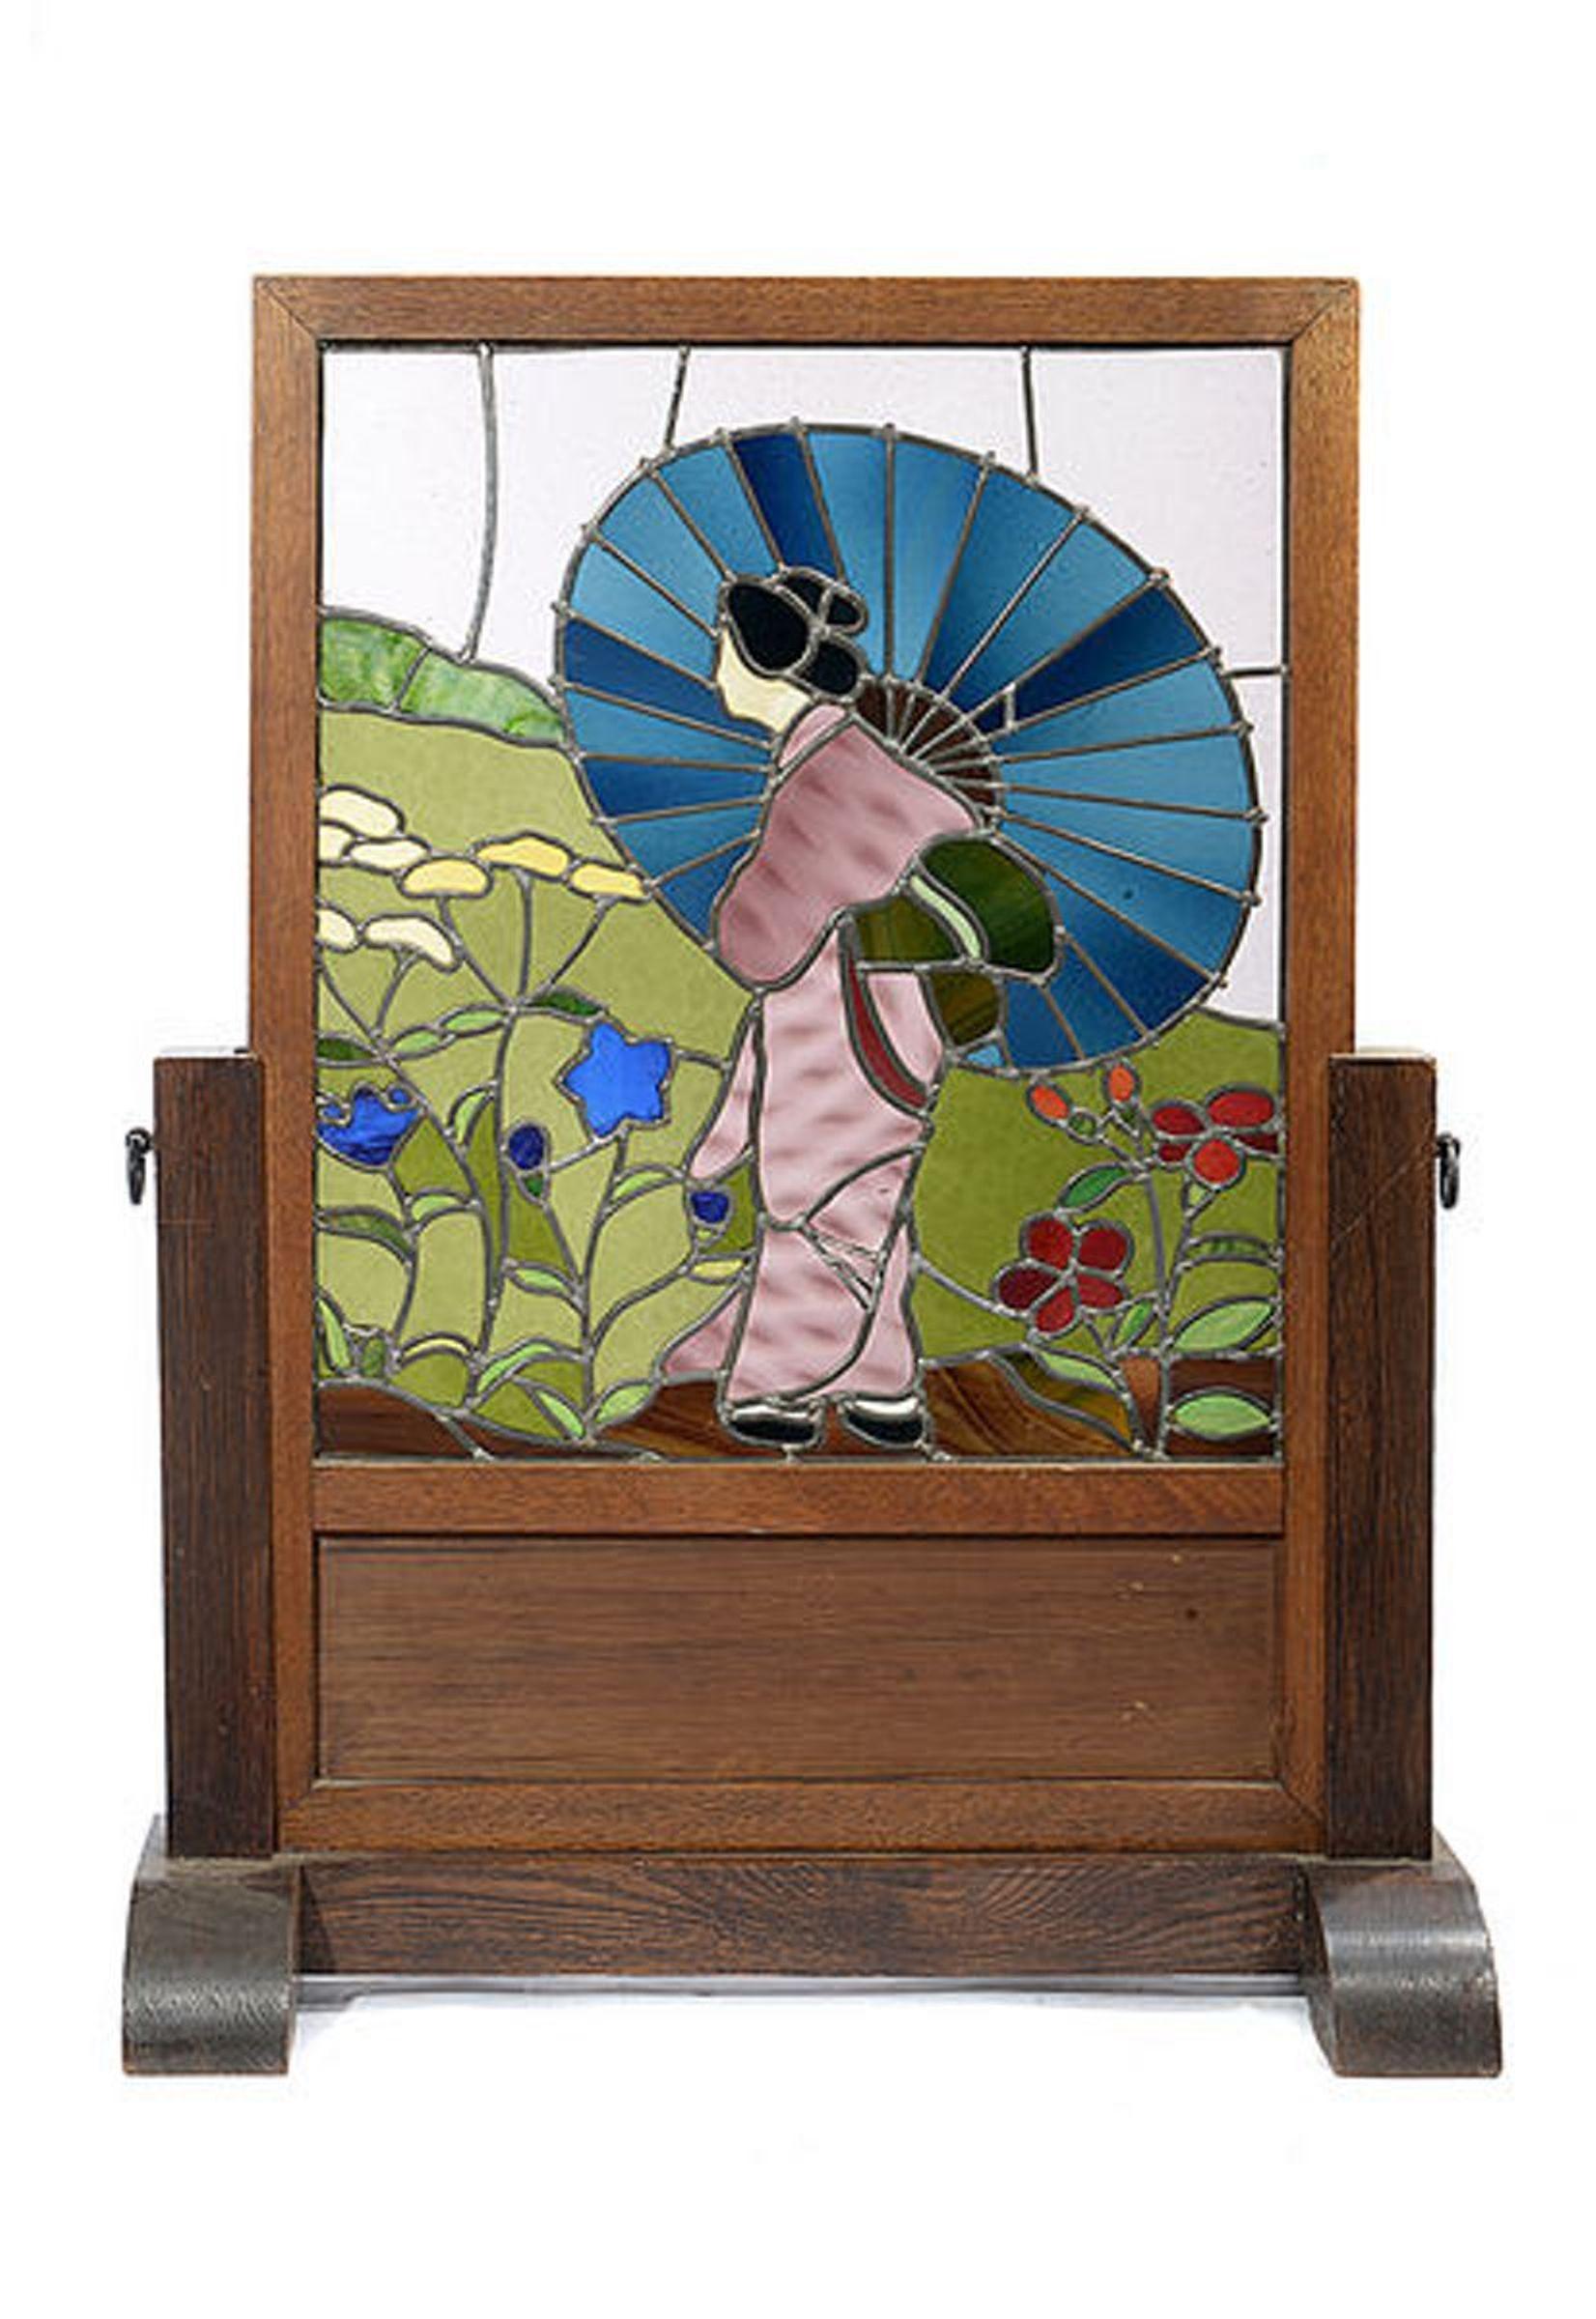 Art Deco Oak Framed Screen Depicting a Japanese Figure in a Garden Setting For Sale 1